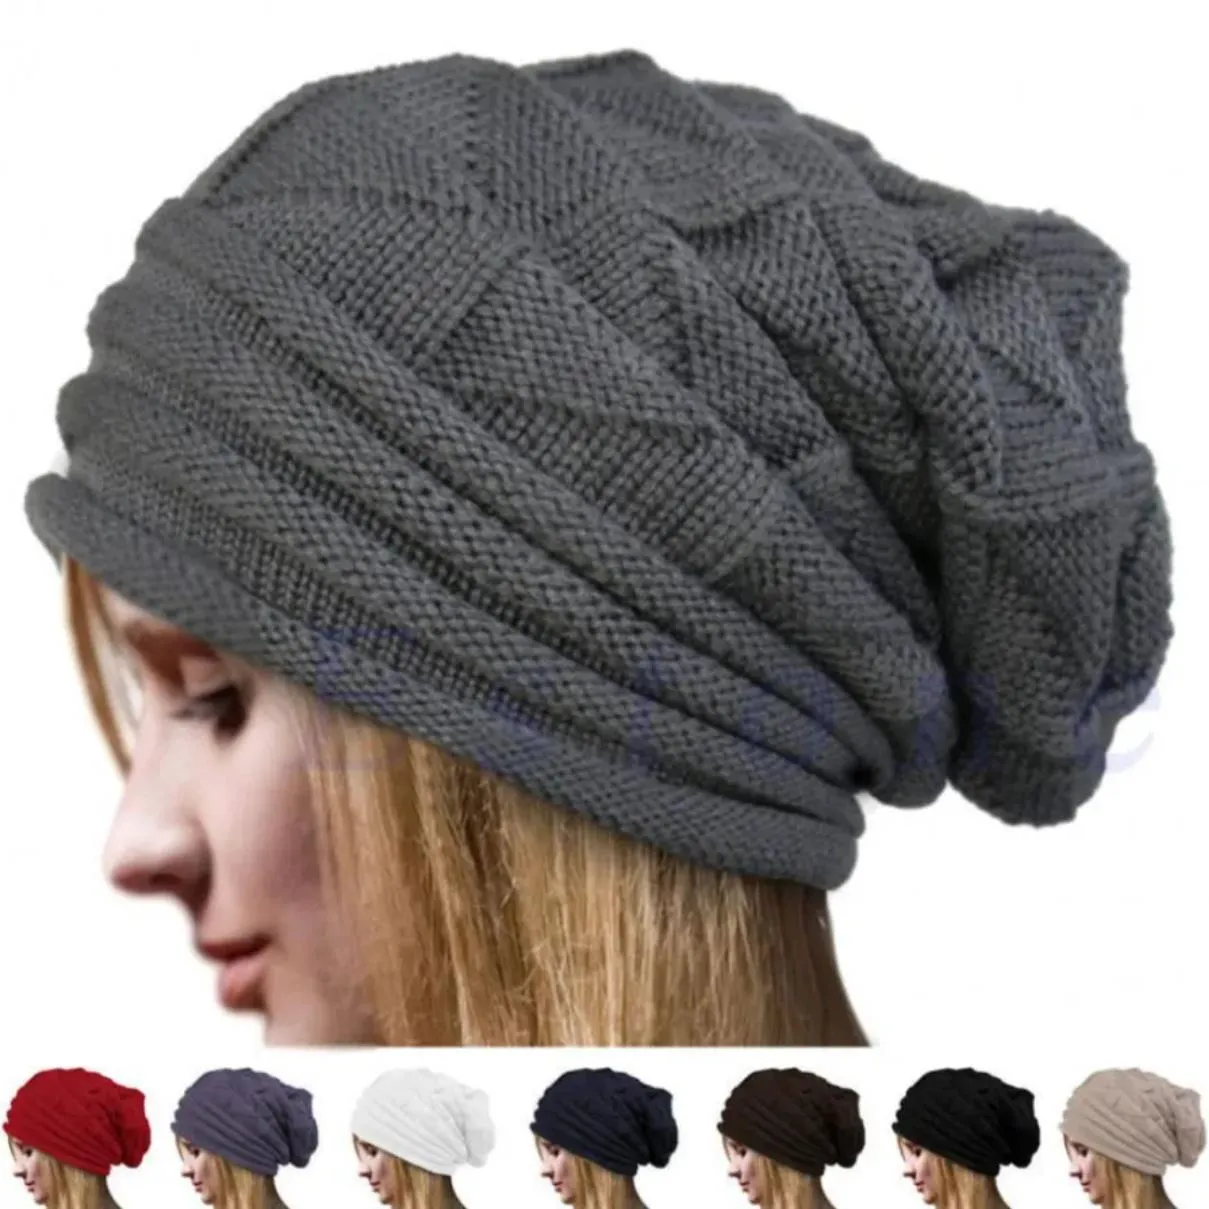 New Home Knitted Long Beanie Oversized Ski Hat Slouchy Skullies Hats Women Men Winter Wool Warm Hat Unisex Wholesale